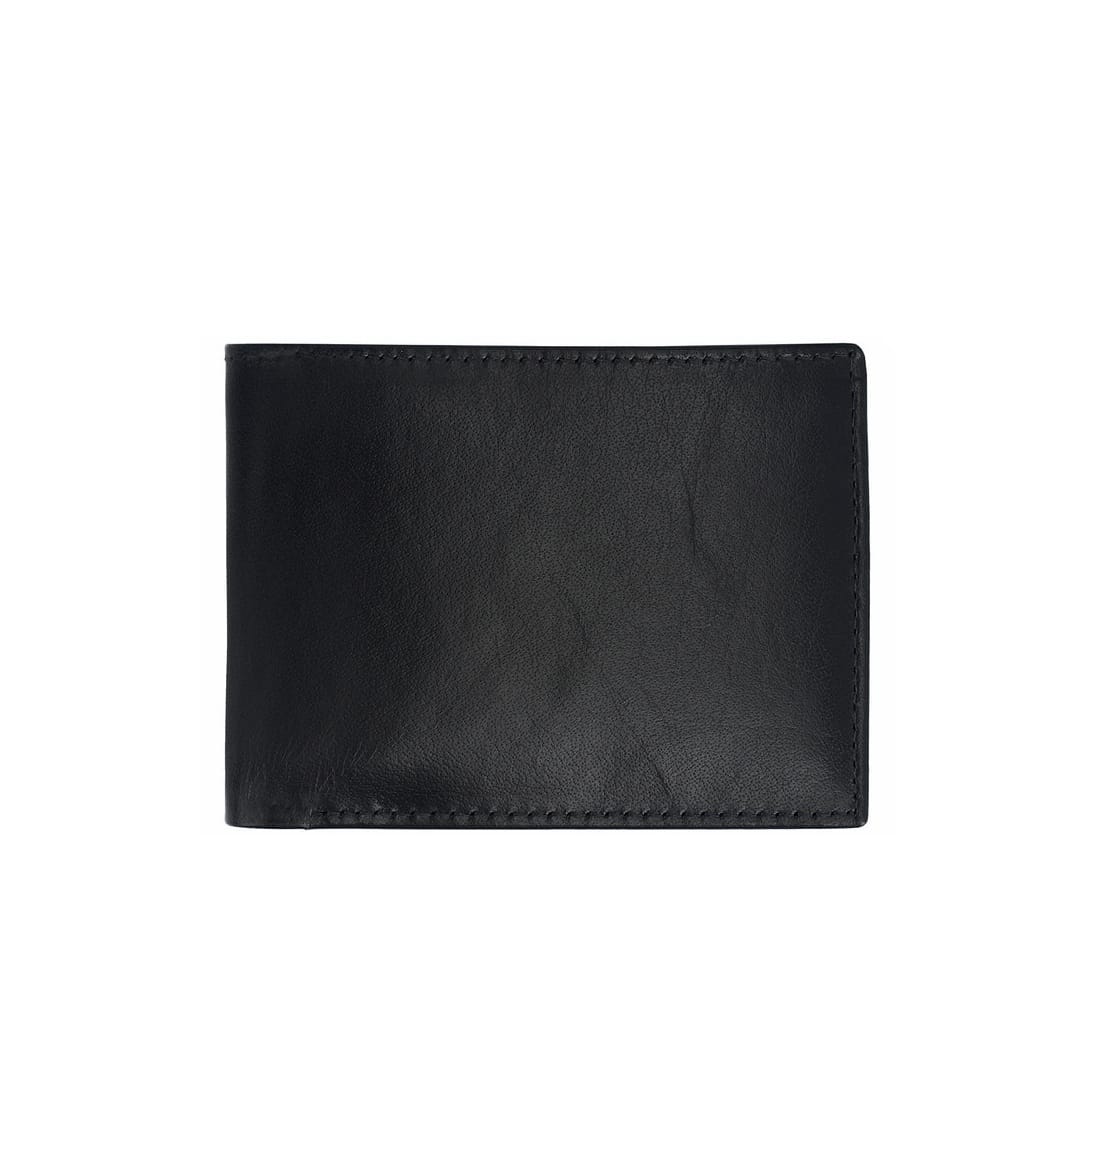 Black Solid Color Faux Leather Wallet